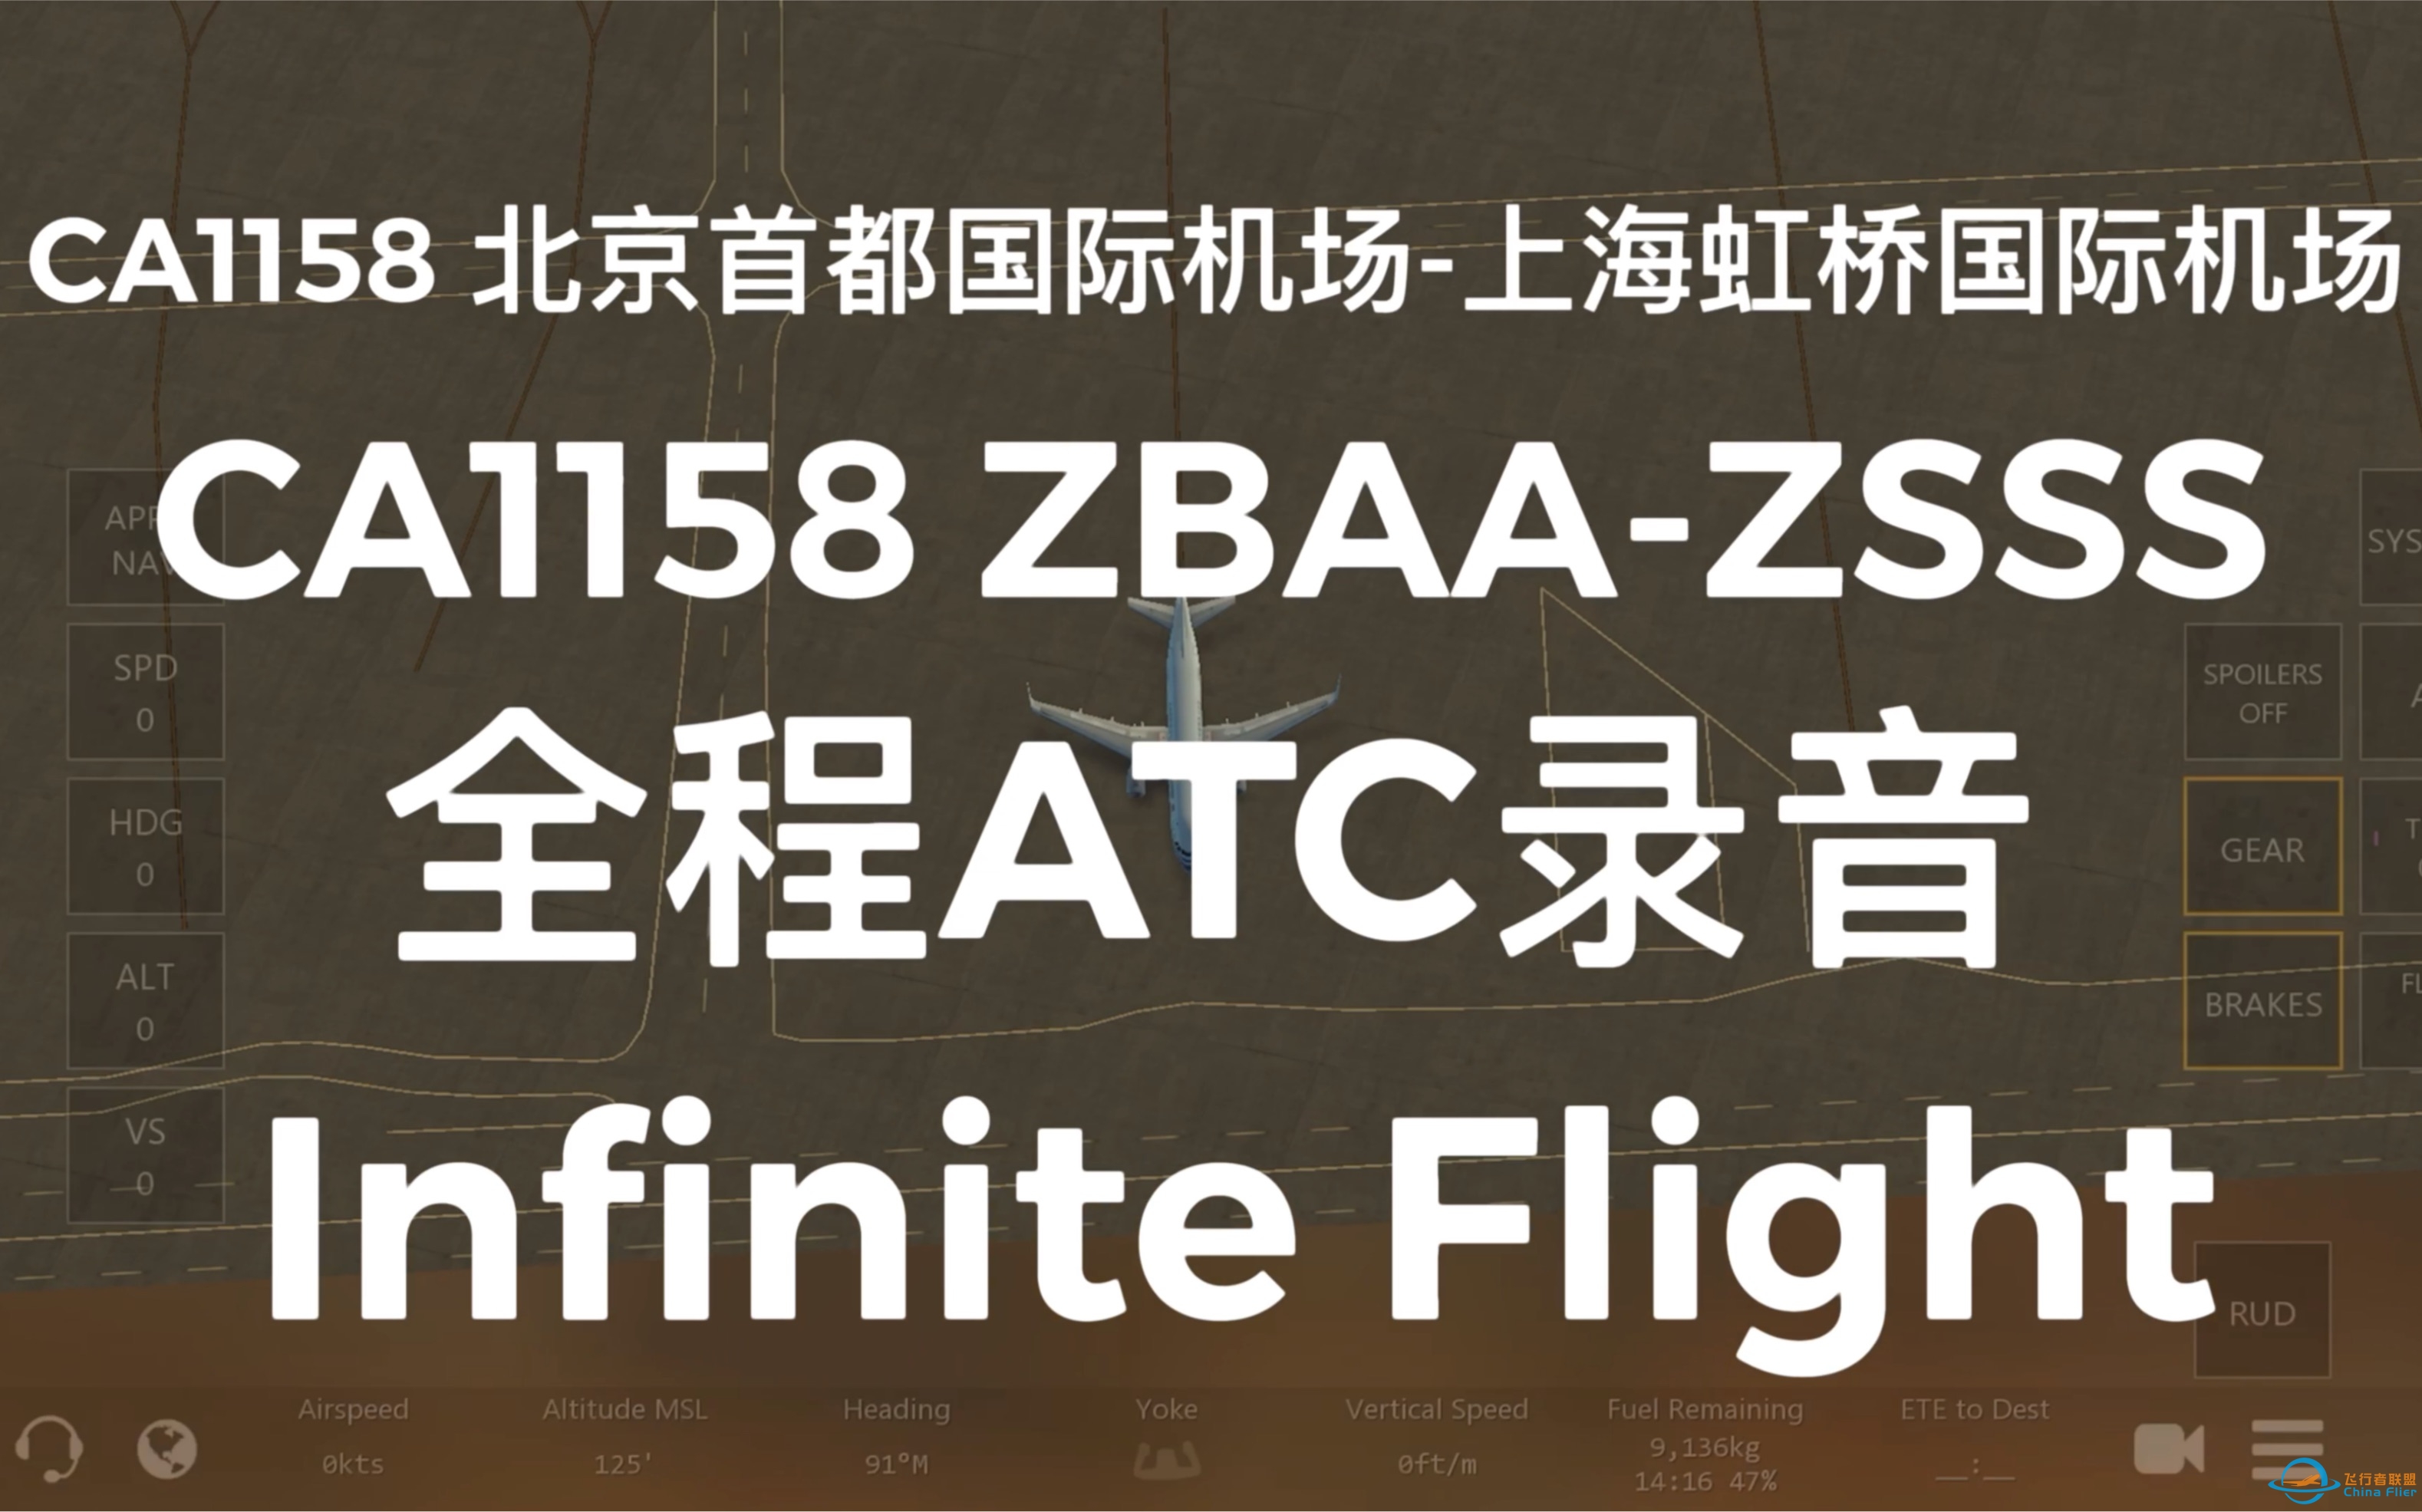 Infinite Flight CCA1158 北京首都PEK-上海虹桥SHA 飞行实录 （全程ATC录音）Part 1-6357 